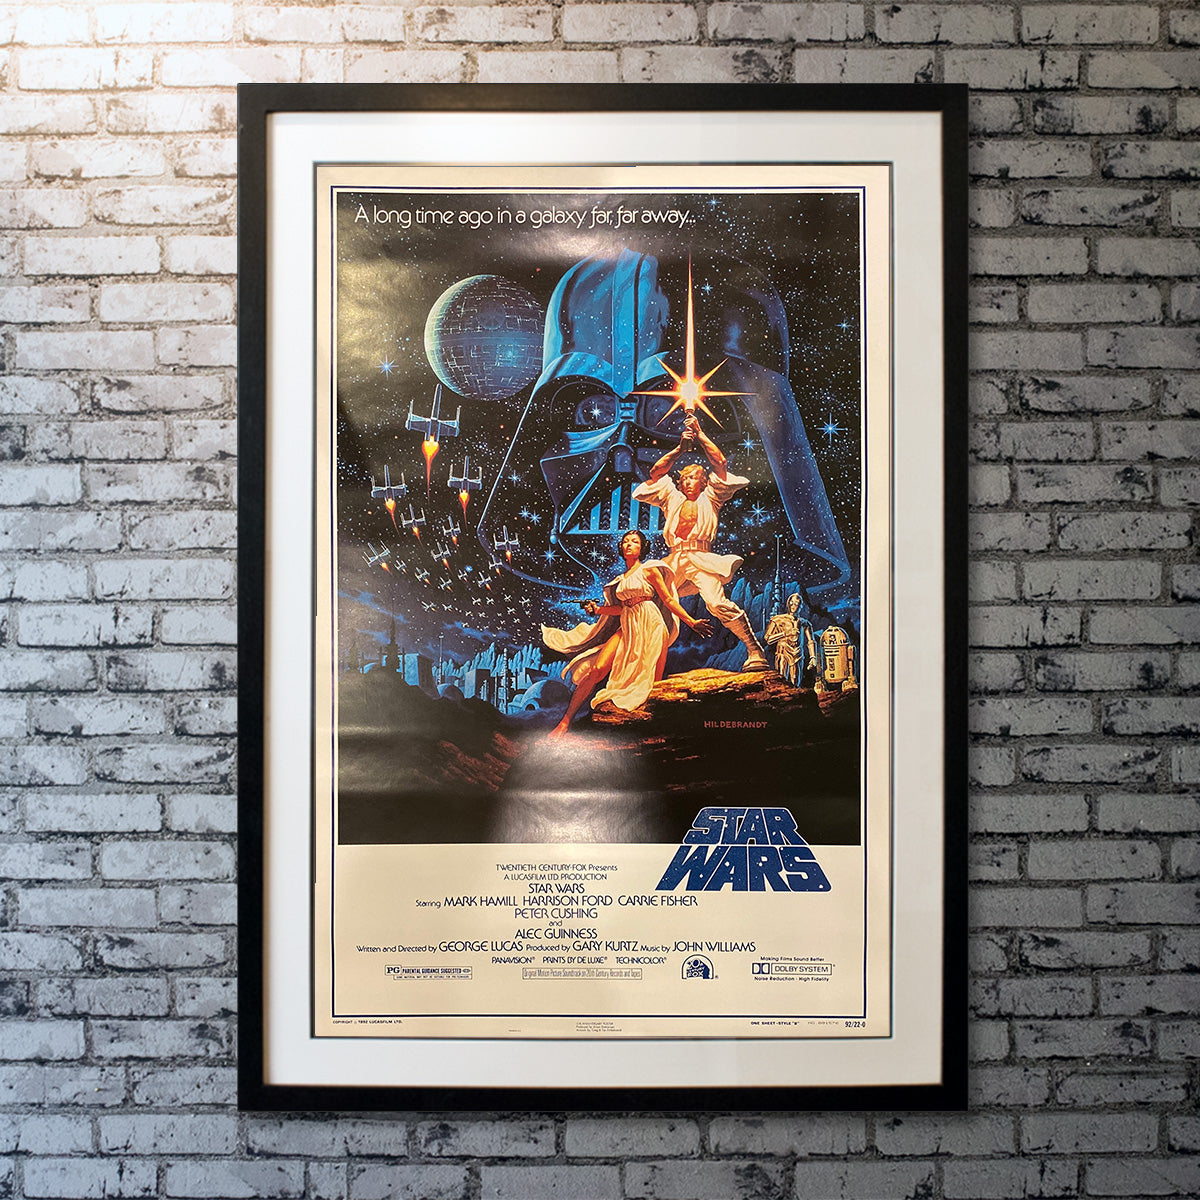 Original Movie Poster of Star Wars (1992R)